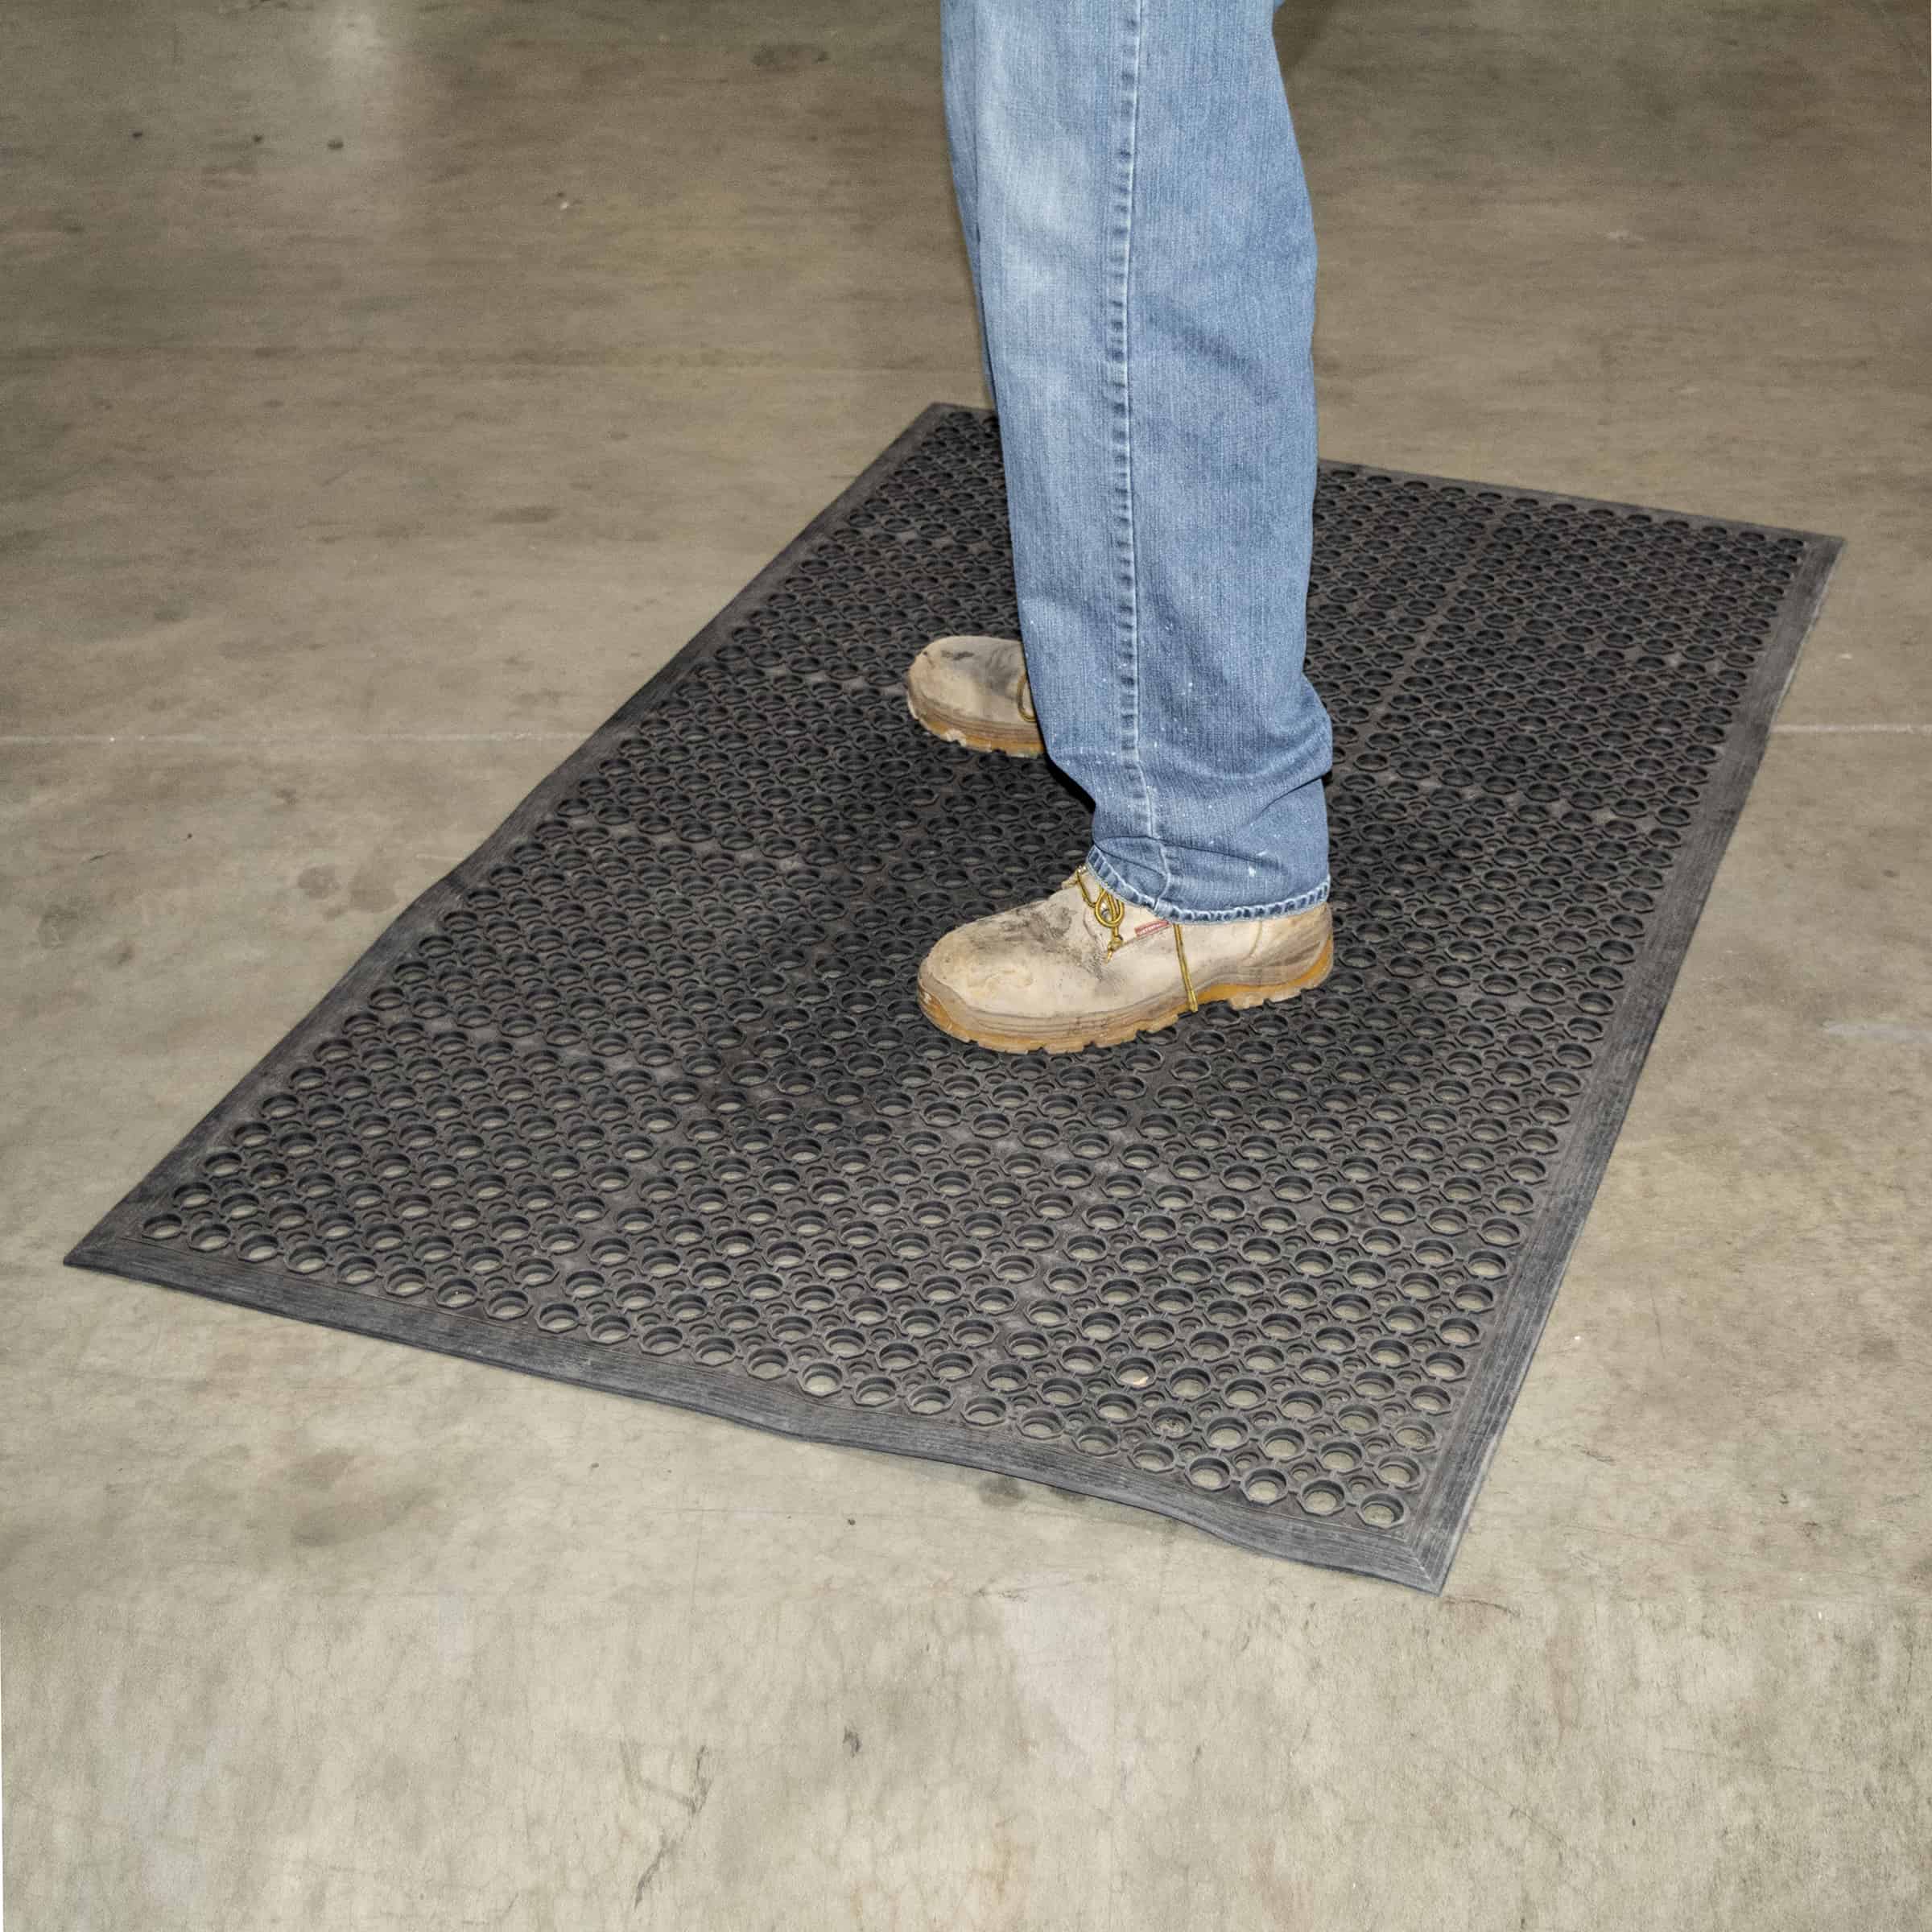 3 x 5 ft. Anti-Fatigue Non-Slip Rubber Floor Mat Garage Shop Truck Heavy  Duty